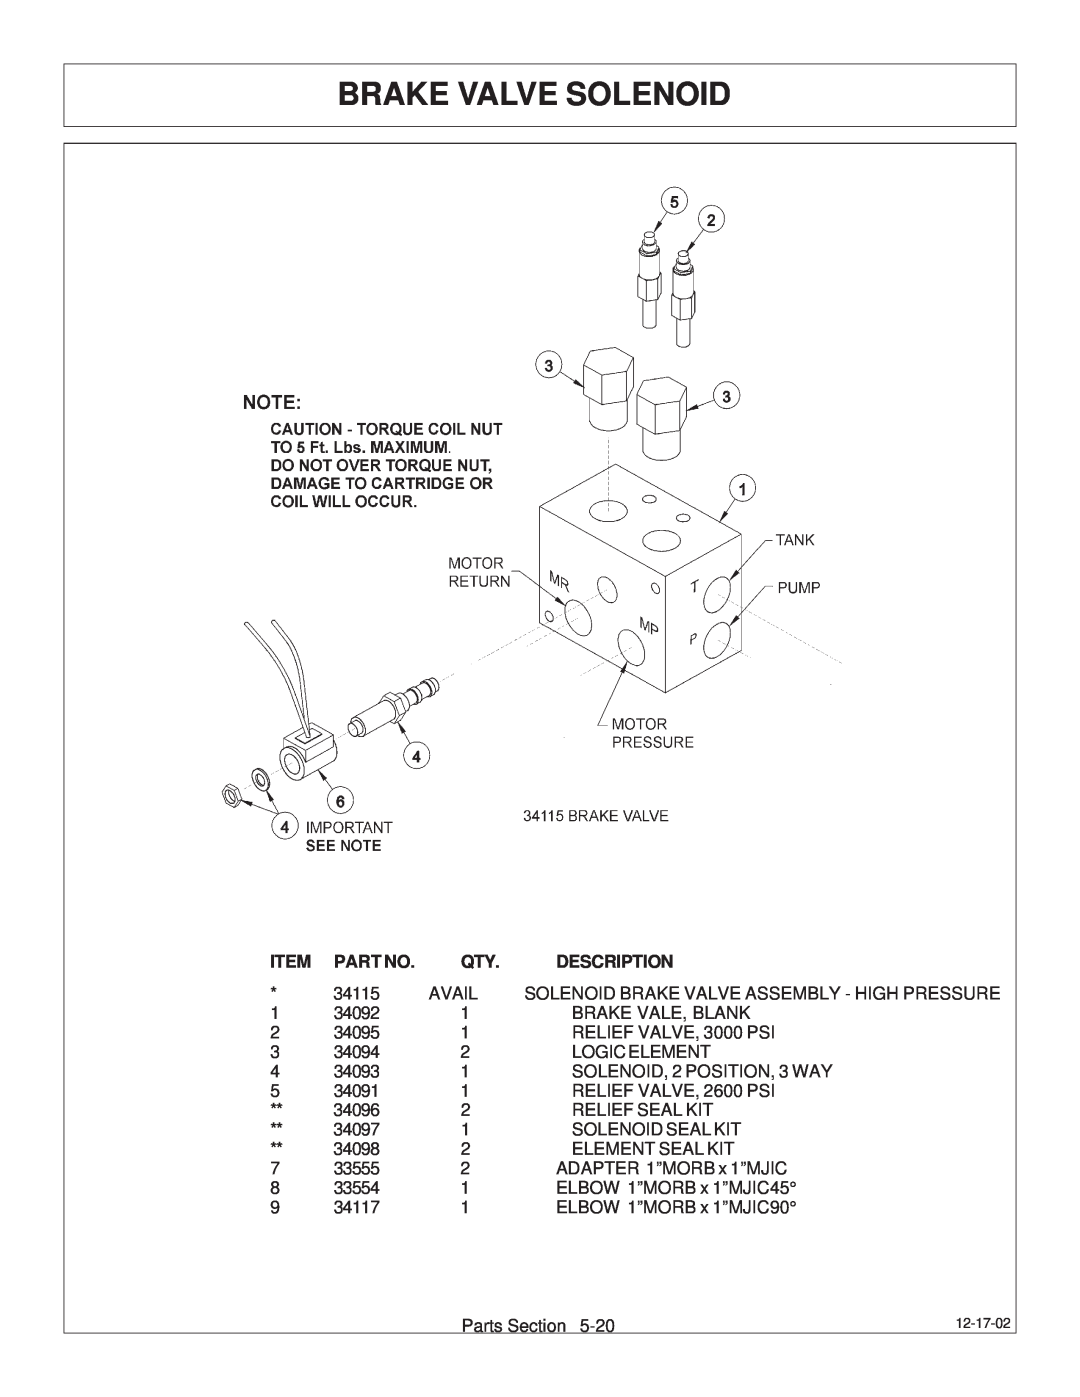 Tiger Products Co., Ltd TS 100A manual Brake Valve Solenoid, Description 